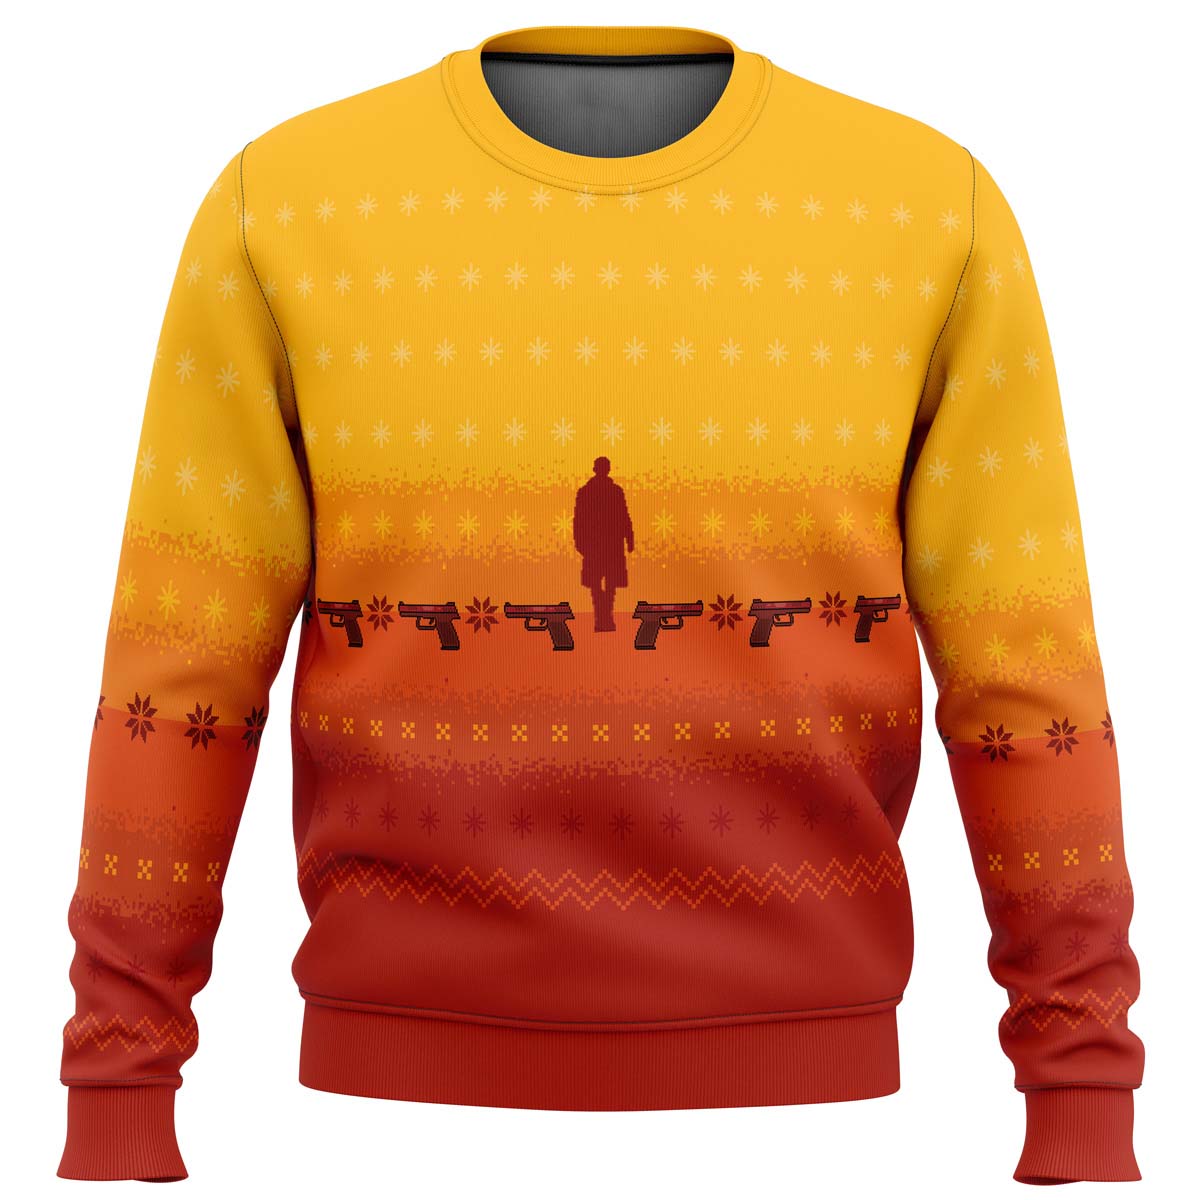 Blade Runner 2049 Ugly Christmas Sweater